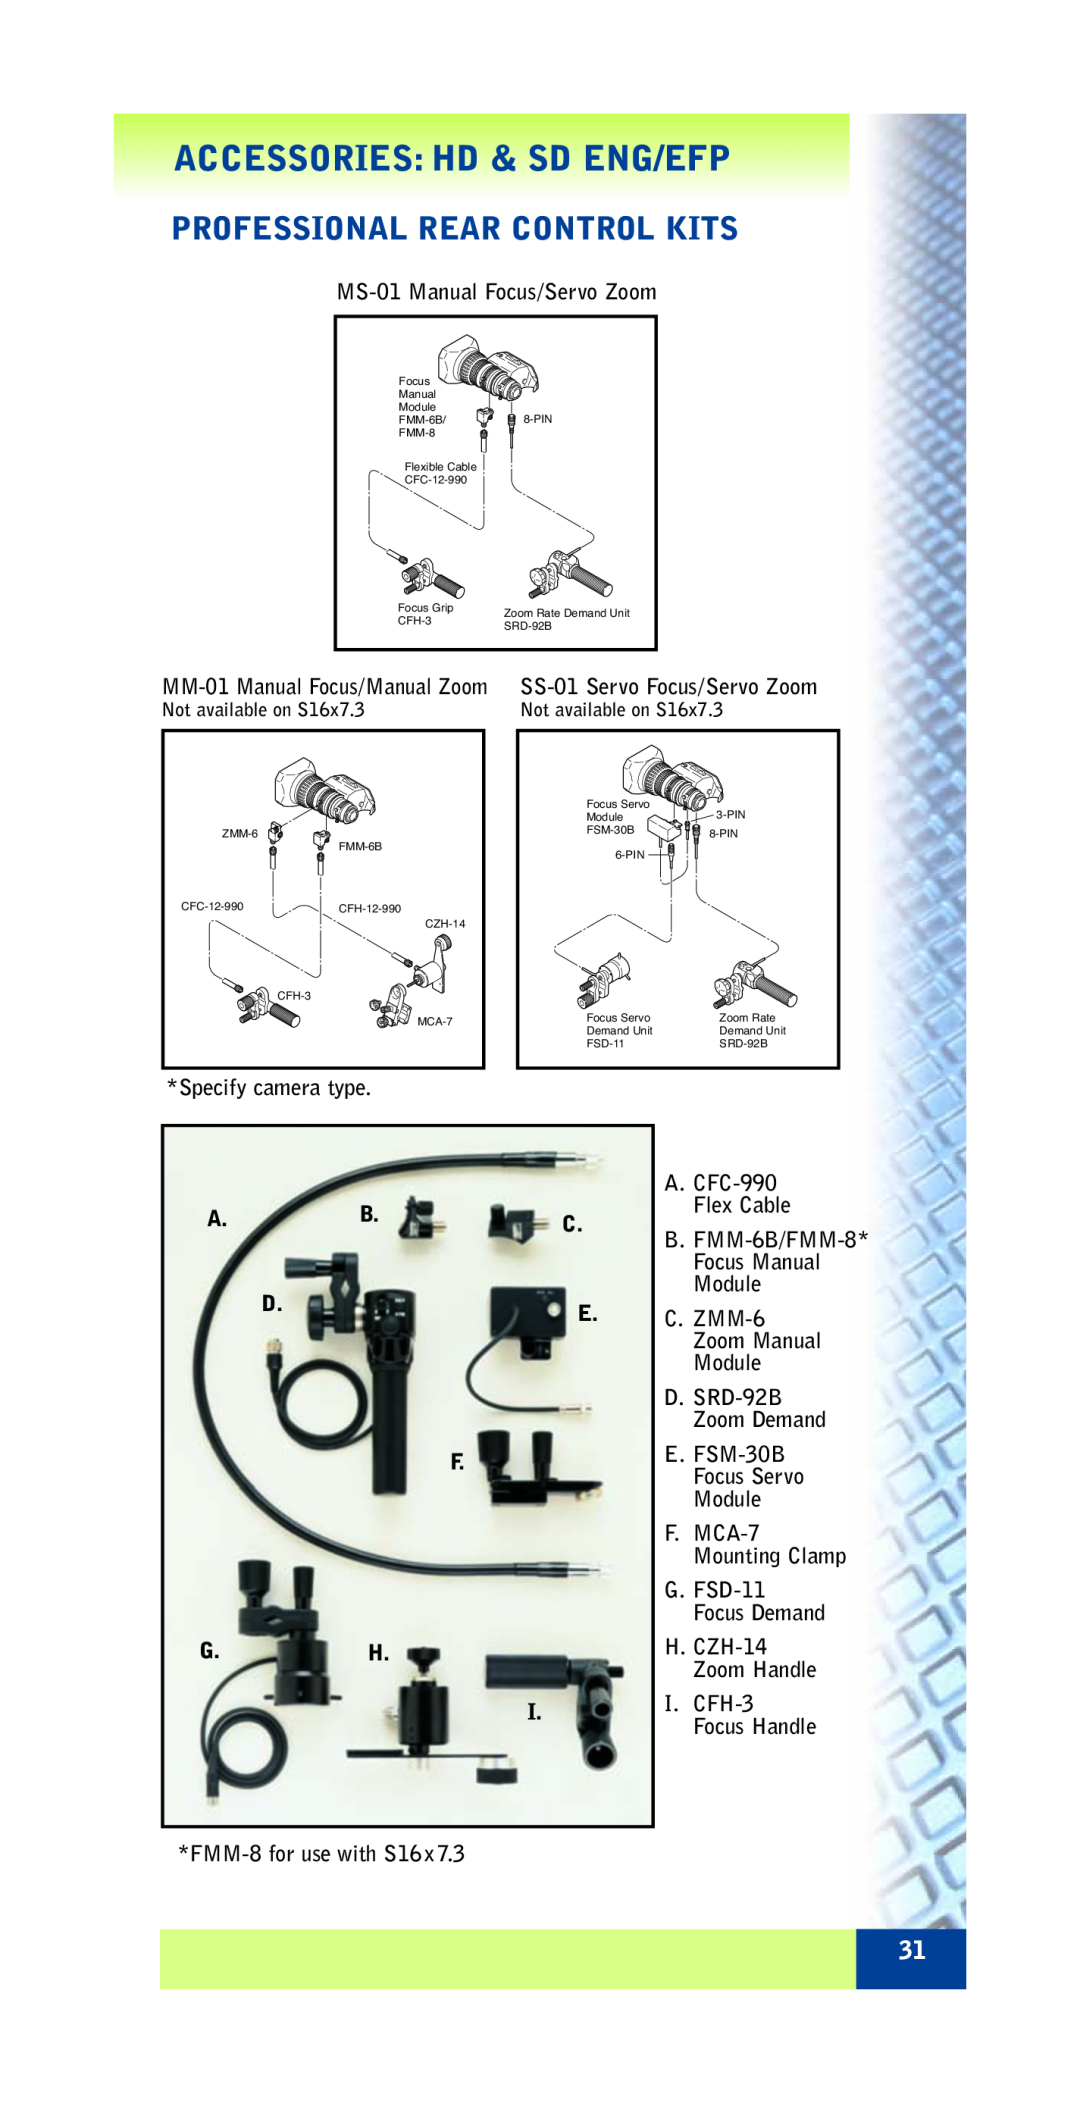 FujiFilm ZA12X4.5B RM/RD Professional Rear Control Kits, Accessories Hd & Sd Eng/Efp, MS-01 Manual Focus/Servo Zoom 